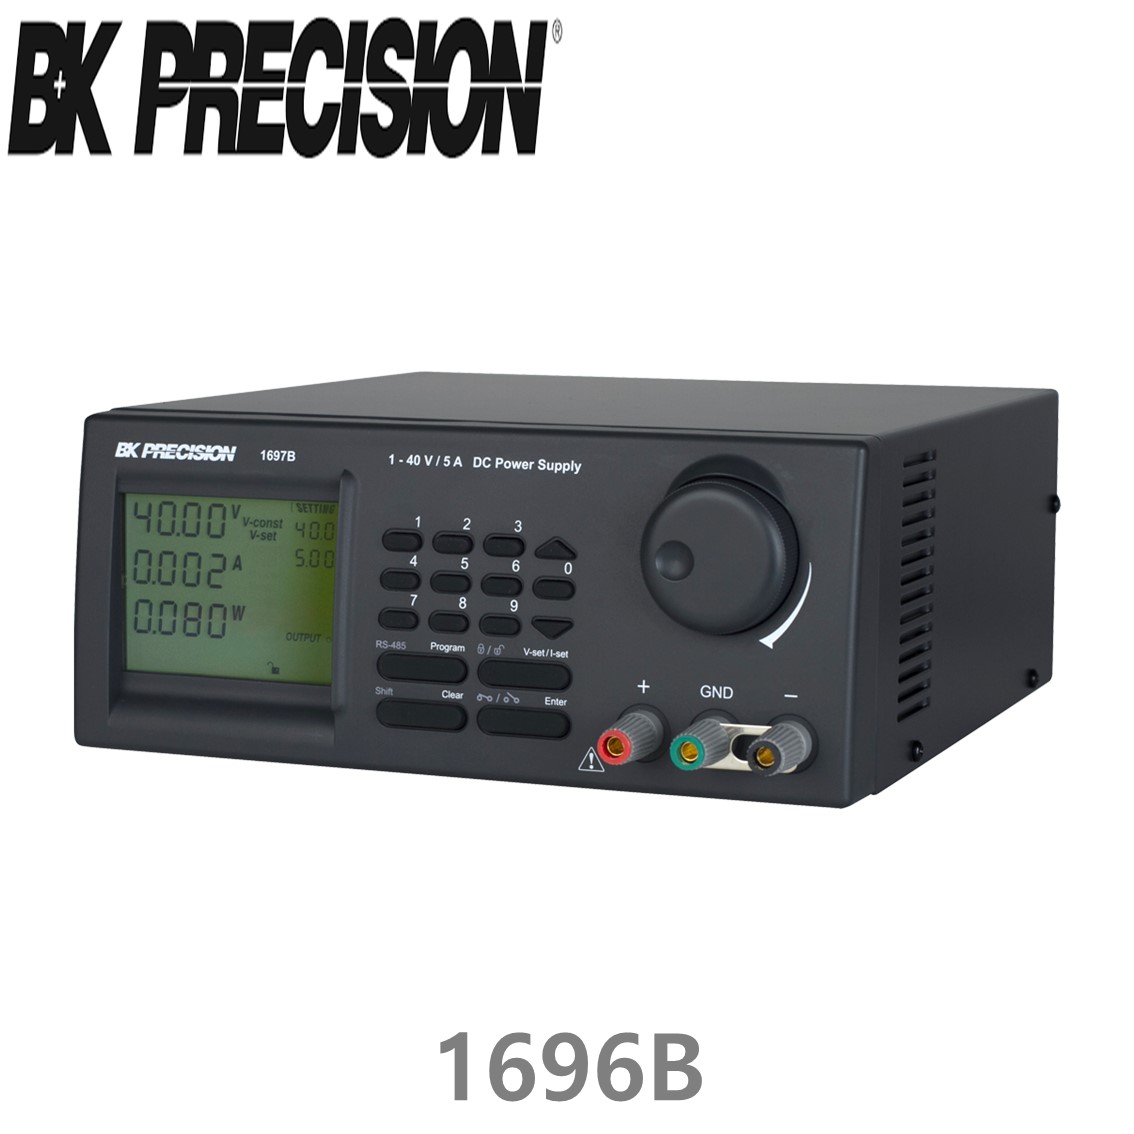 [ BK PRECISION ] BK 1696B, 20V/10A, Programmable DC Switching Power Supply, DC 전원공급기, B&K 1696B